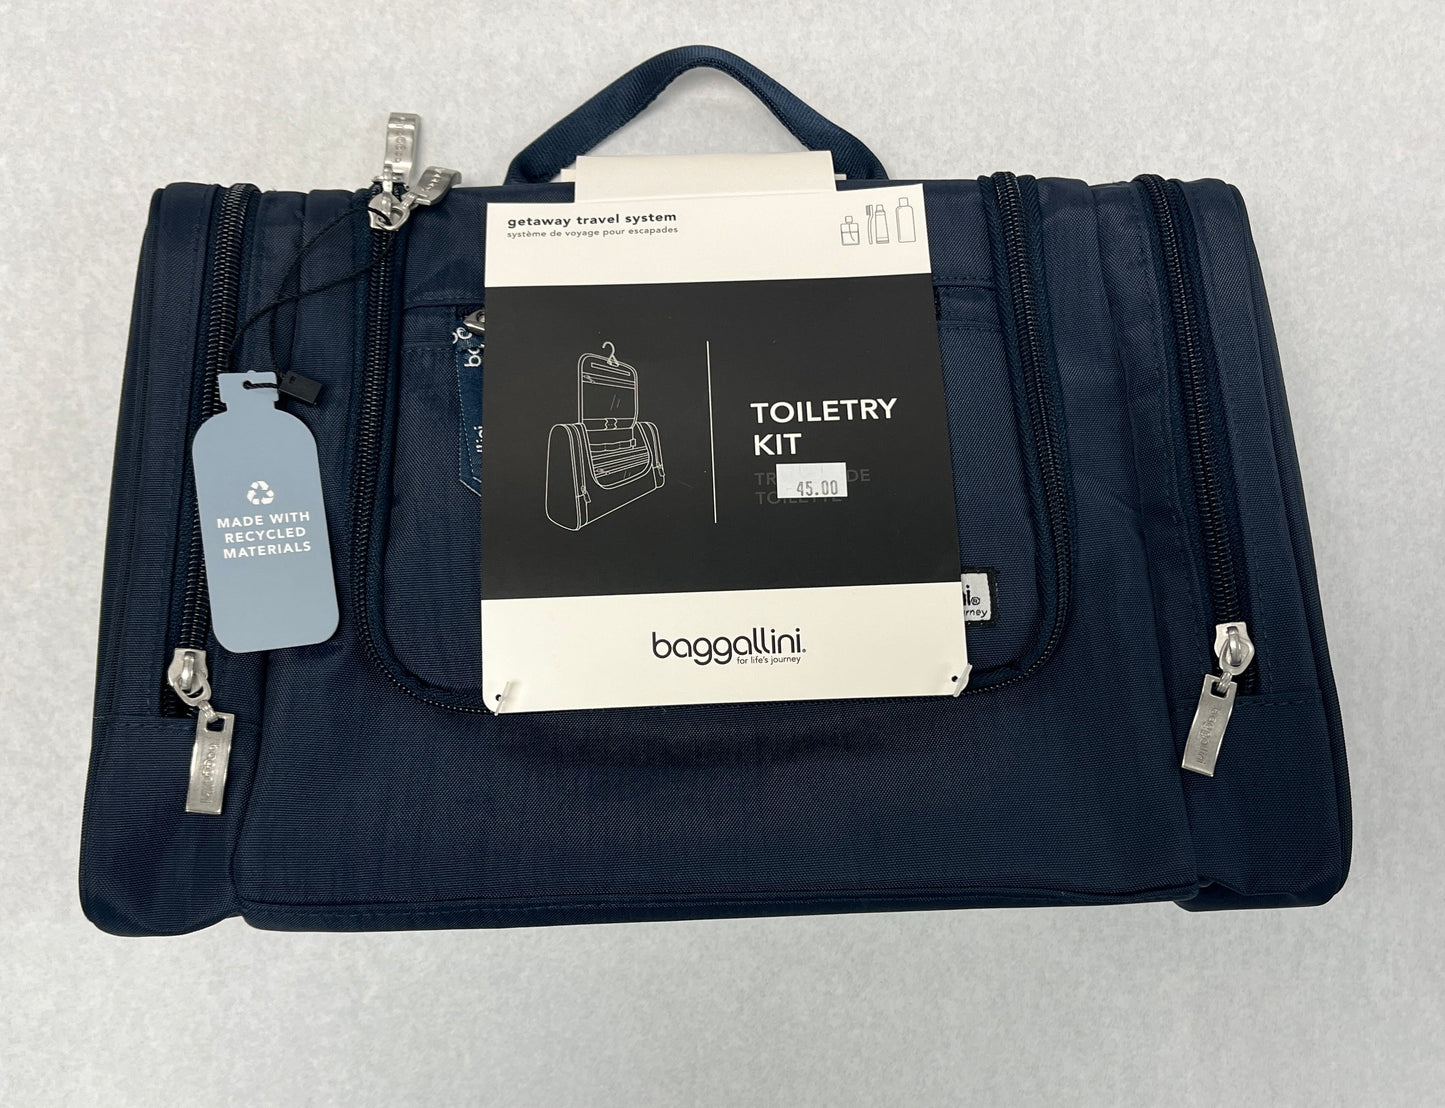 Baggallini Toiletry Kit – Lightweight, Water-Resistant Travel Toiletry Bag TLK487